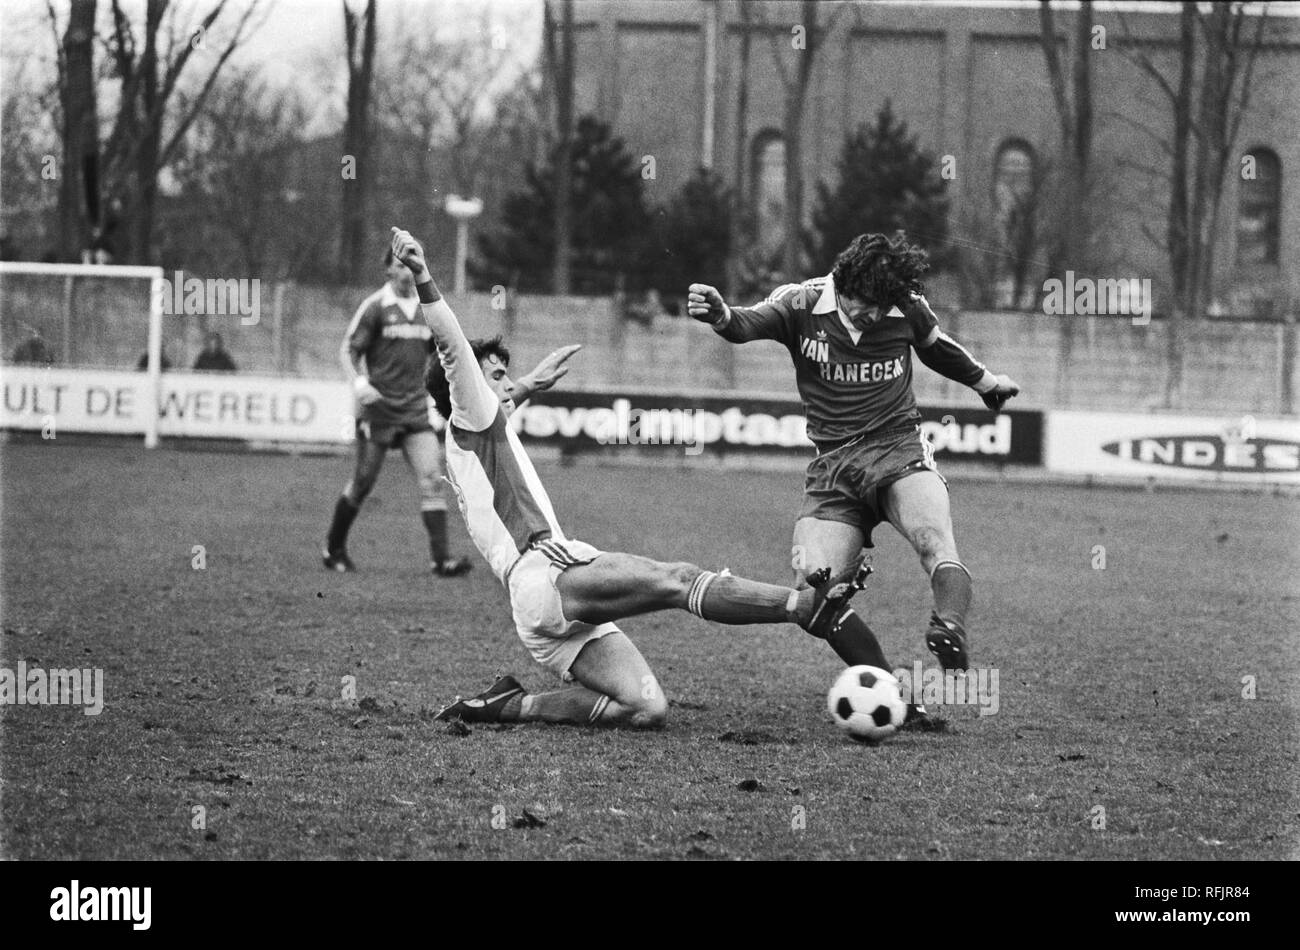 AZ 67 tegen Spart 1-2, Wim van Hanegem im Duell met Balkenstein, Bestanddeelnr 929-6321. Stockfoto